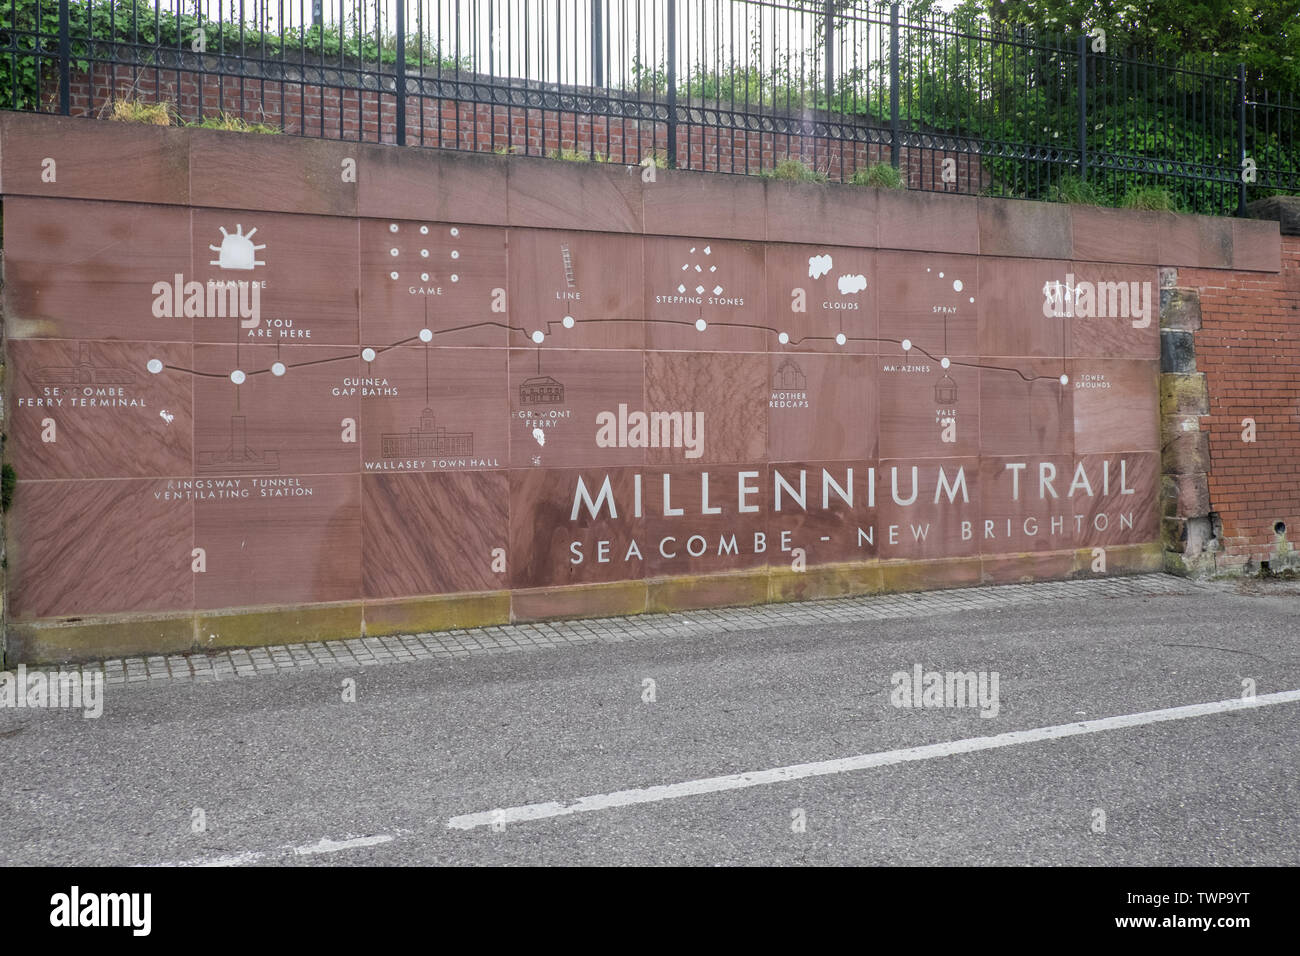 Millennium Trail,Seacombe,a,New Brighton,promenade,Liverpool,Nord,Nord,città,nord ovest,Merseyside,l'Inghilterra,inglese,GB,Gran Bretagna,British,UK, Foto Stock